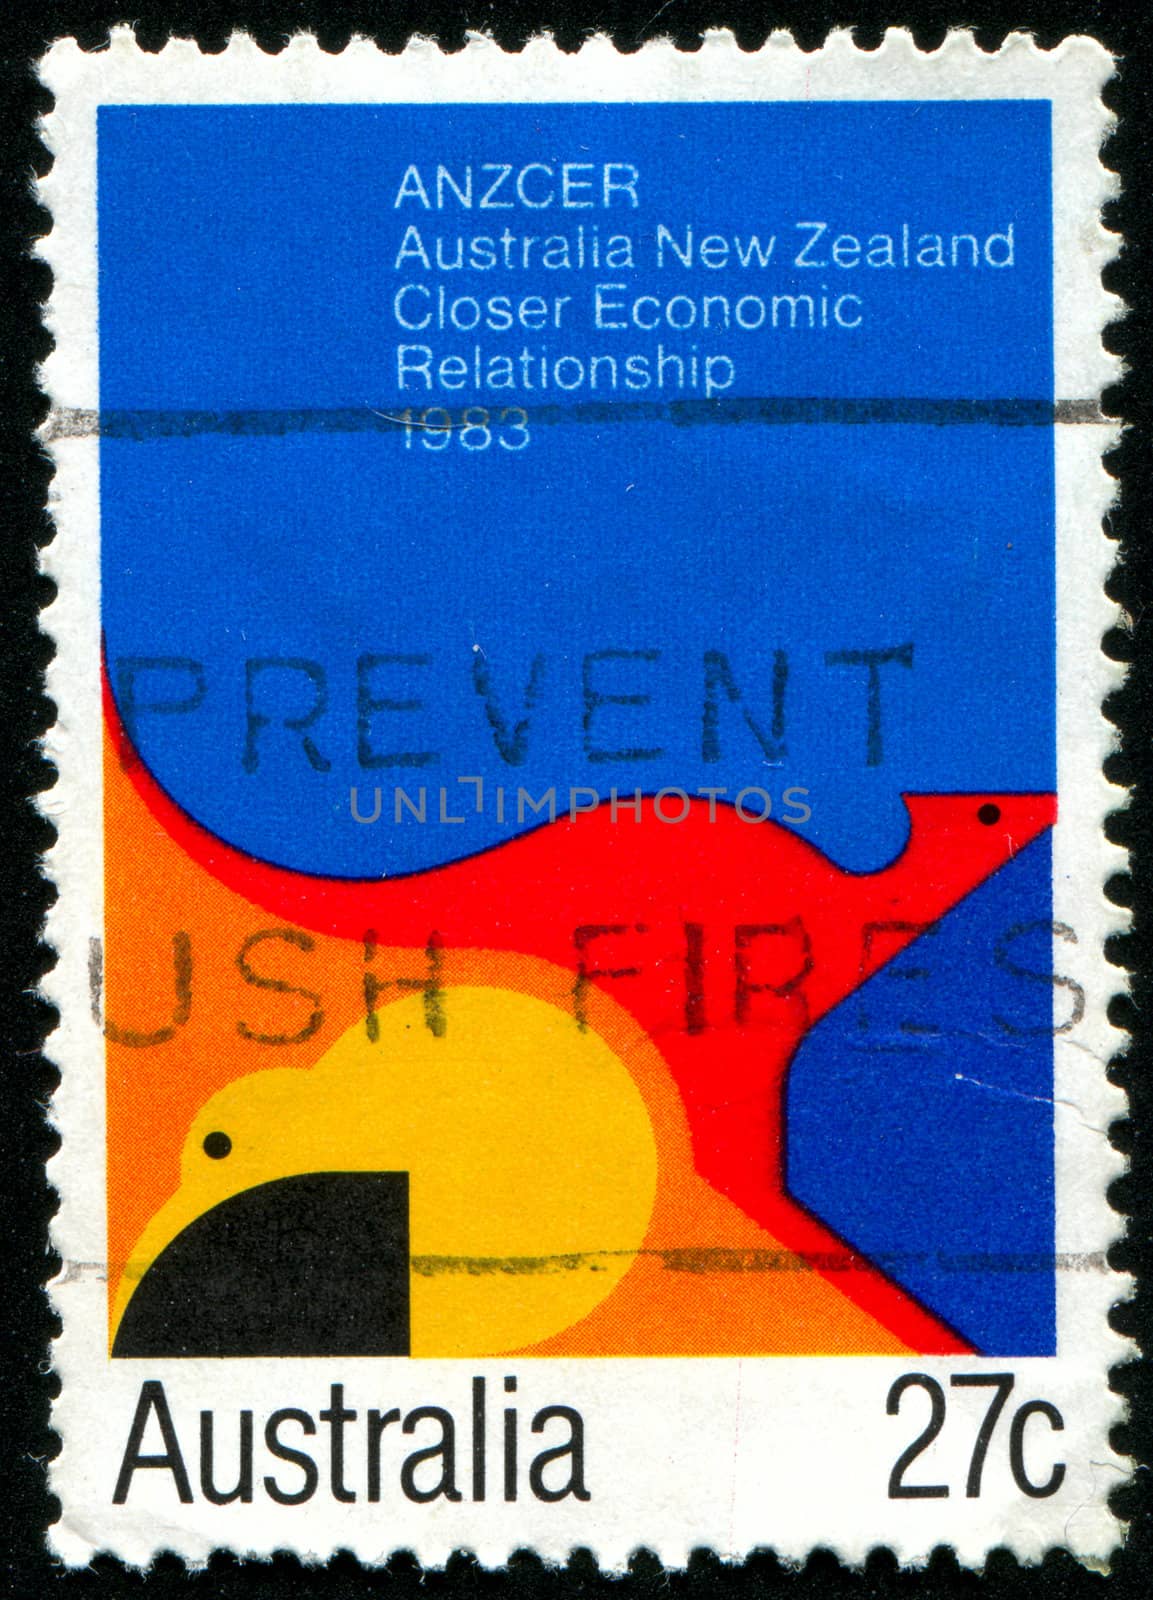 AUSTRALIA - CIRCA 1983: stamp printed by Australia, shows Australia-New Zealand Closer Economic Relationship agreement, circa 1983